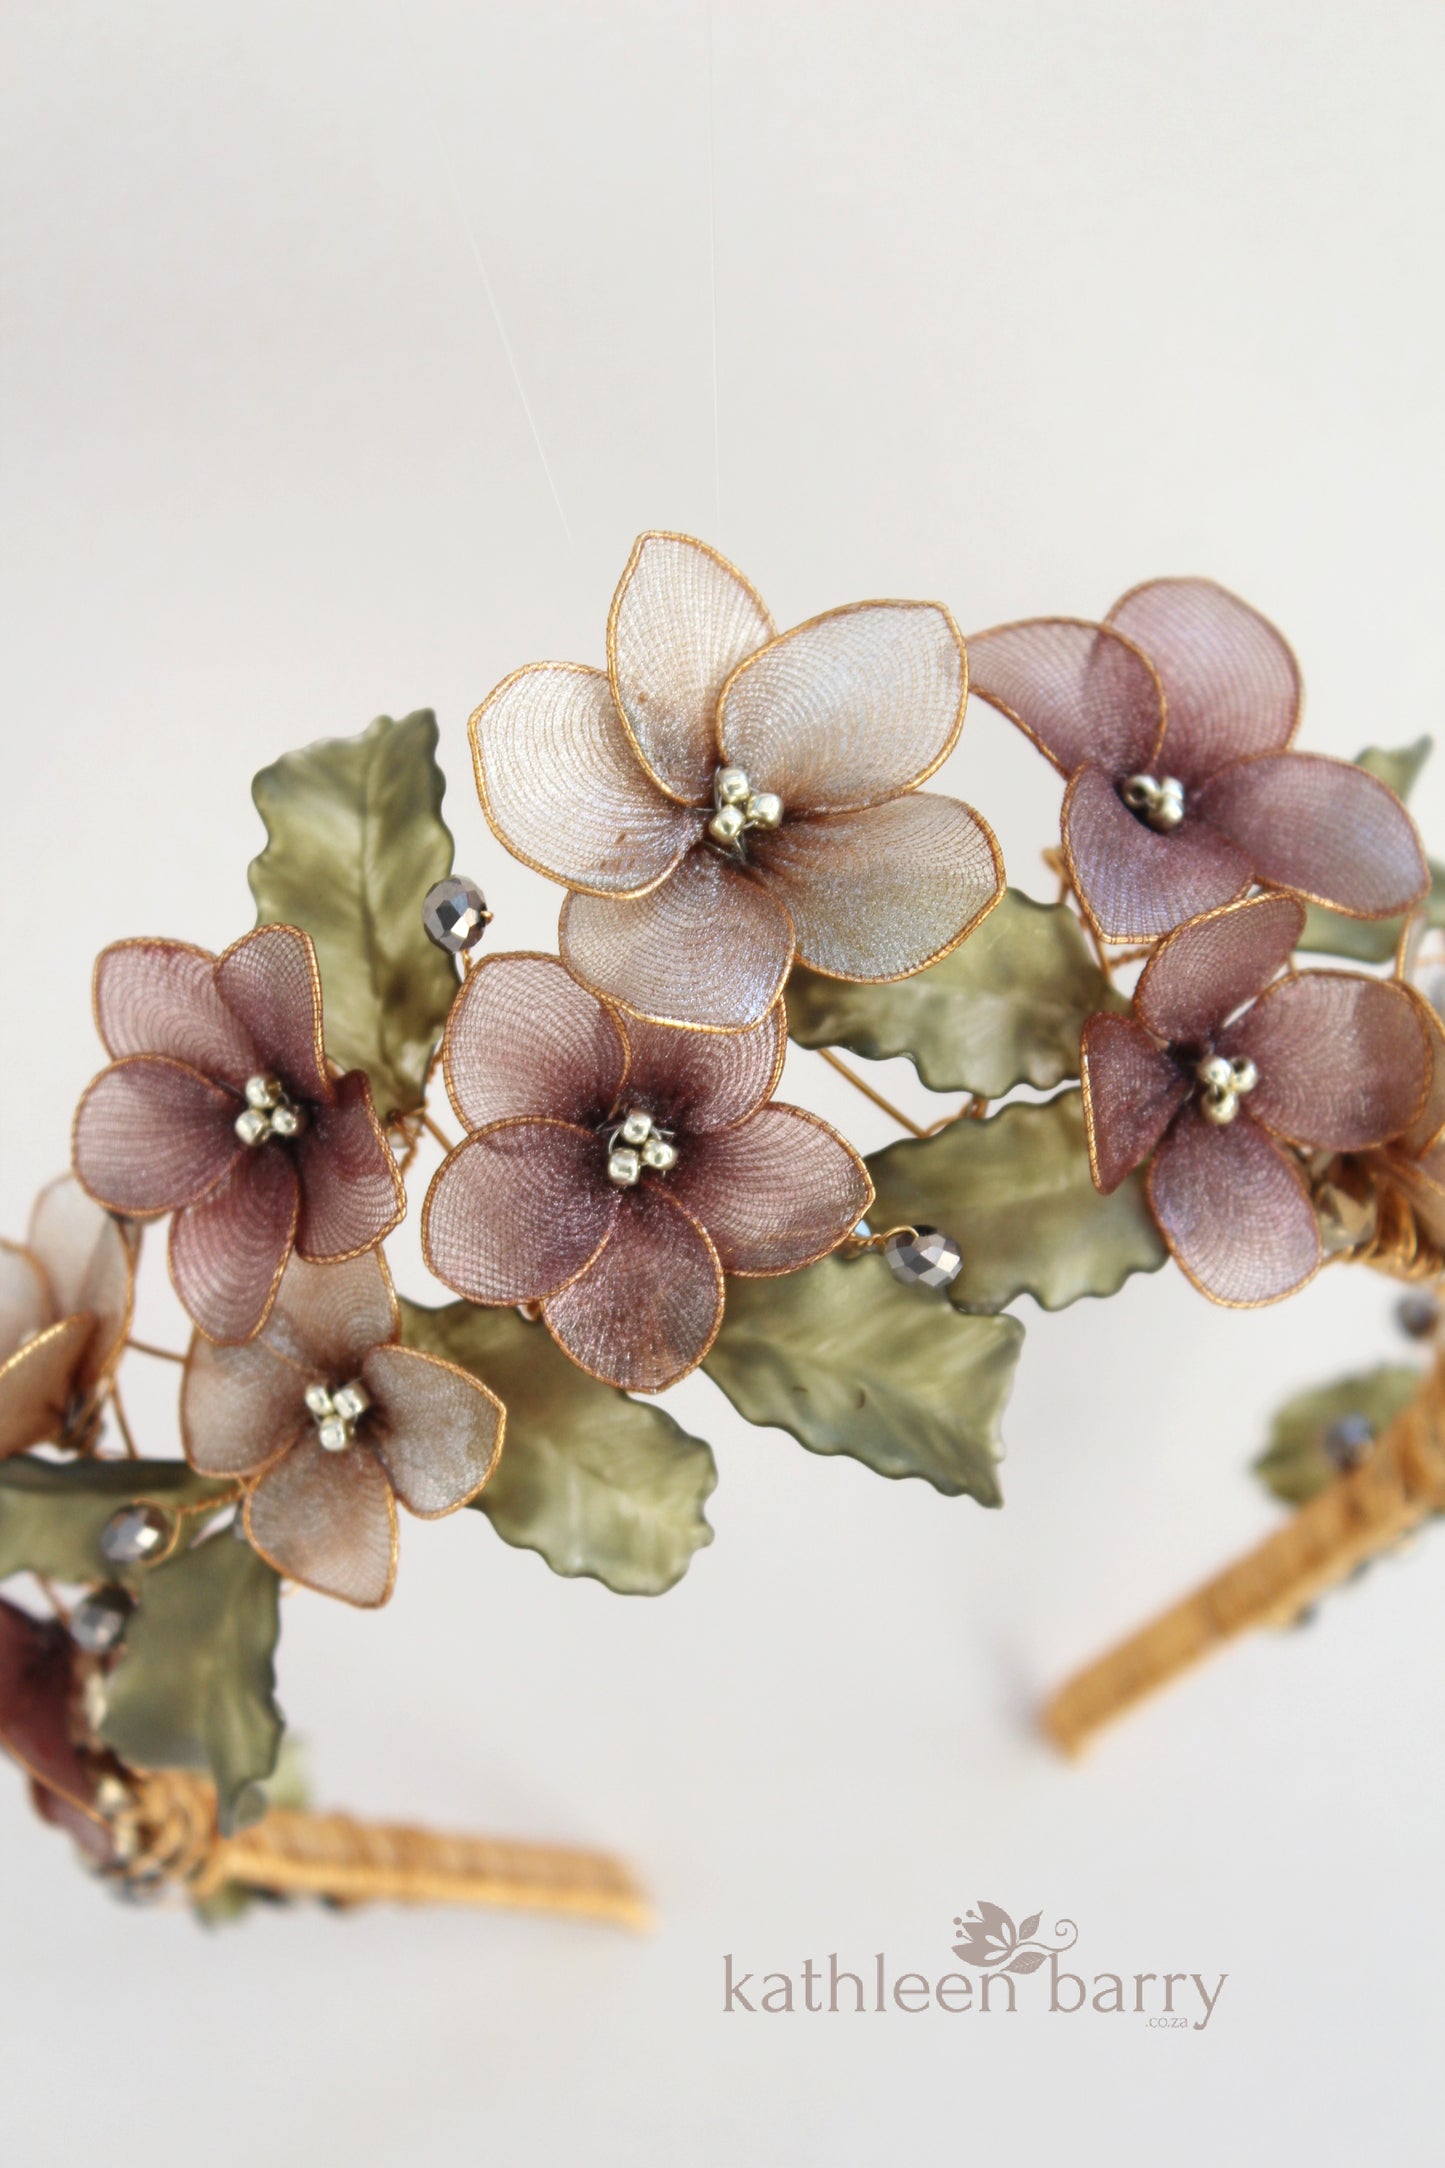 Melinda Muted metallic shade floral tiara style crown - custom colors to order